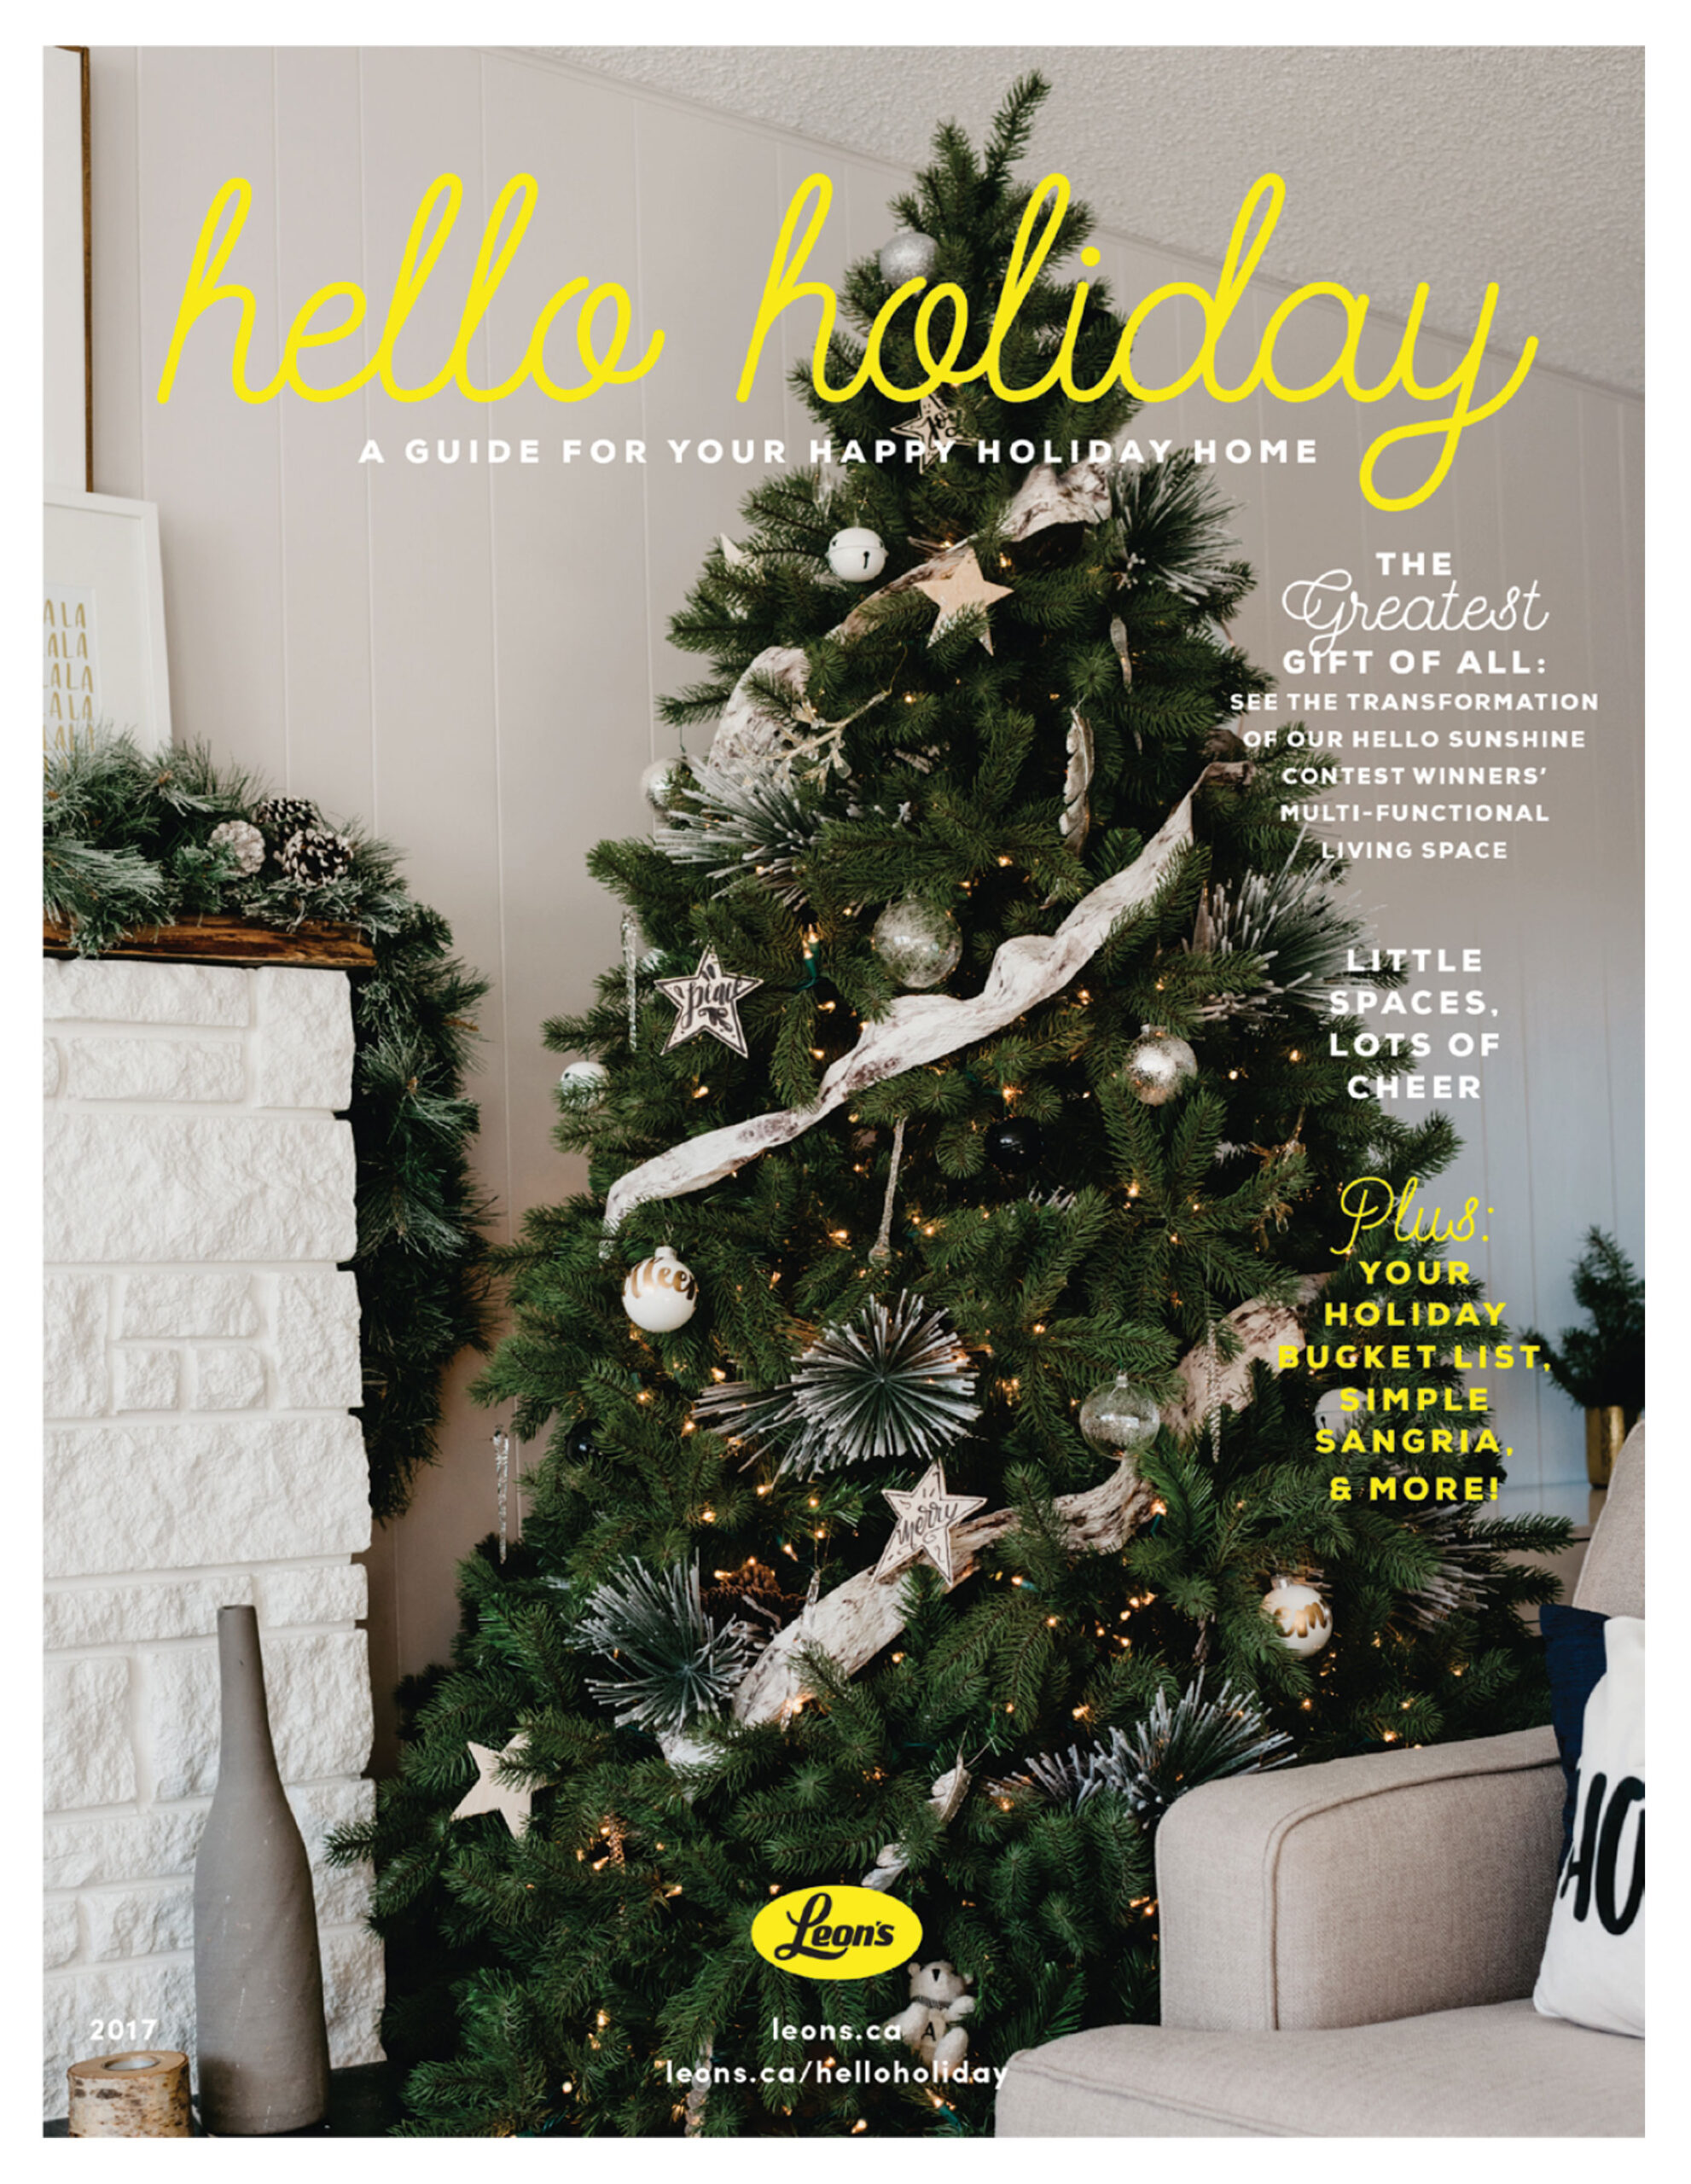 Alex Perlin Magazine Design Hello Holiday